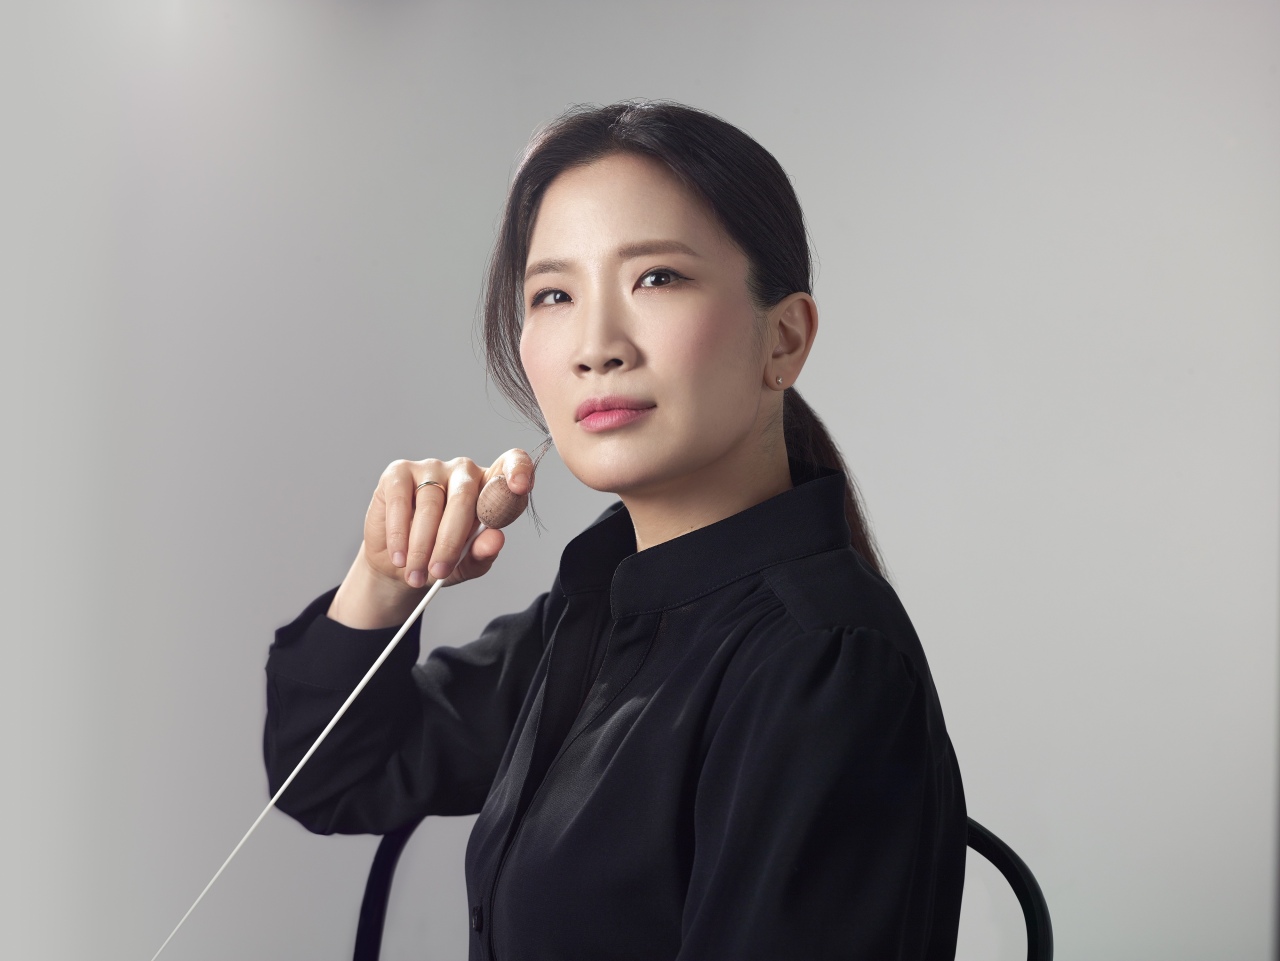 Conductor Kim Eun Sun (SPO)